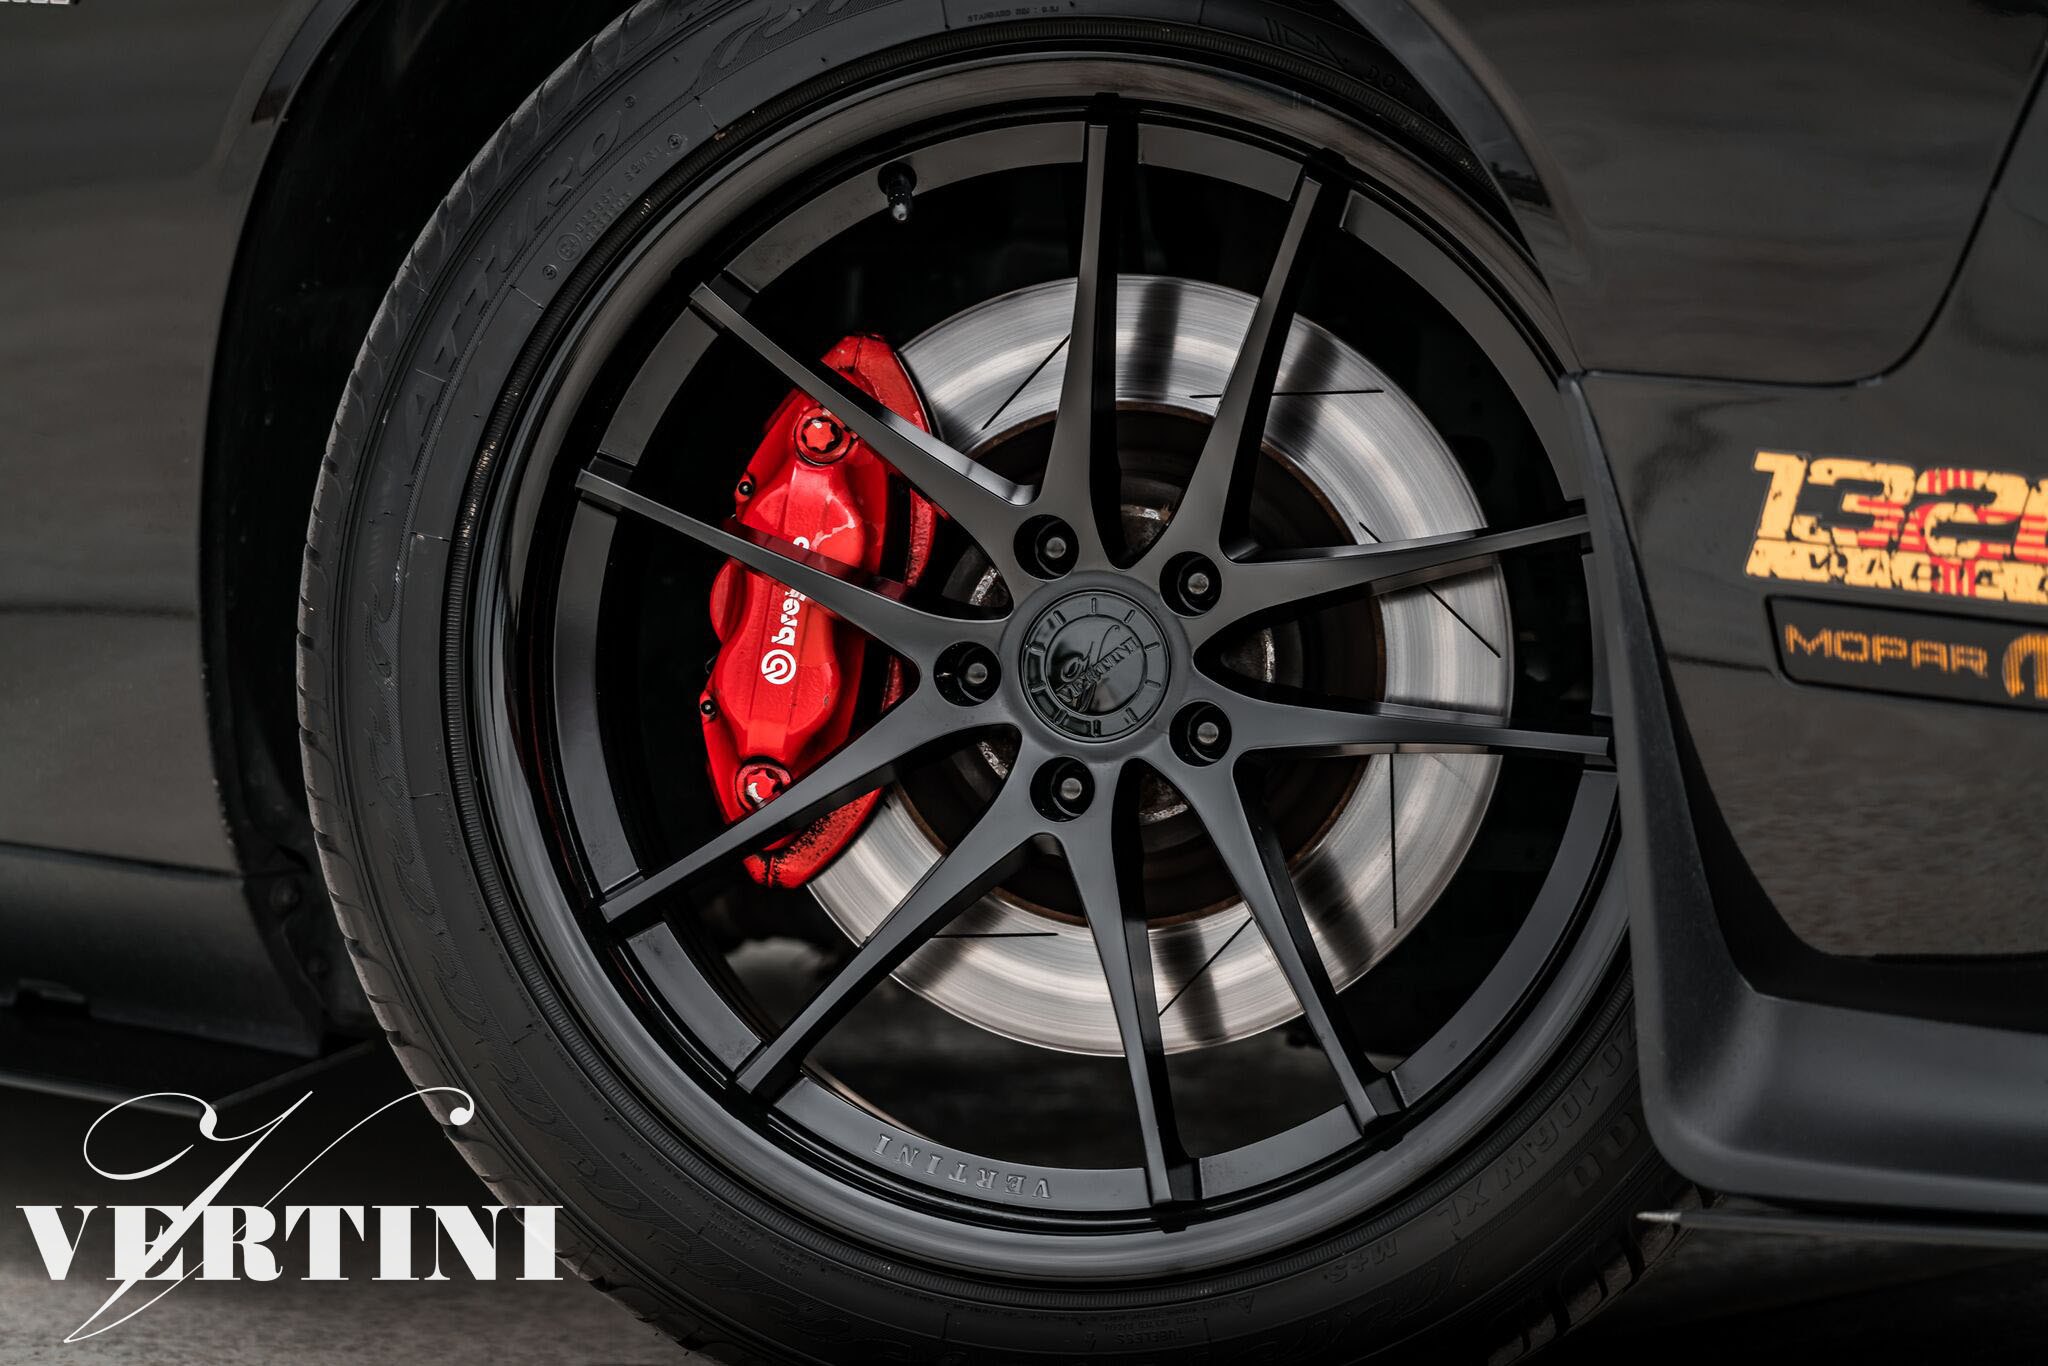 Vertini Rims with Brembo Brakes on Black Dodge Challenger - Photo by Vertini Wheels